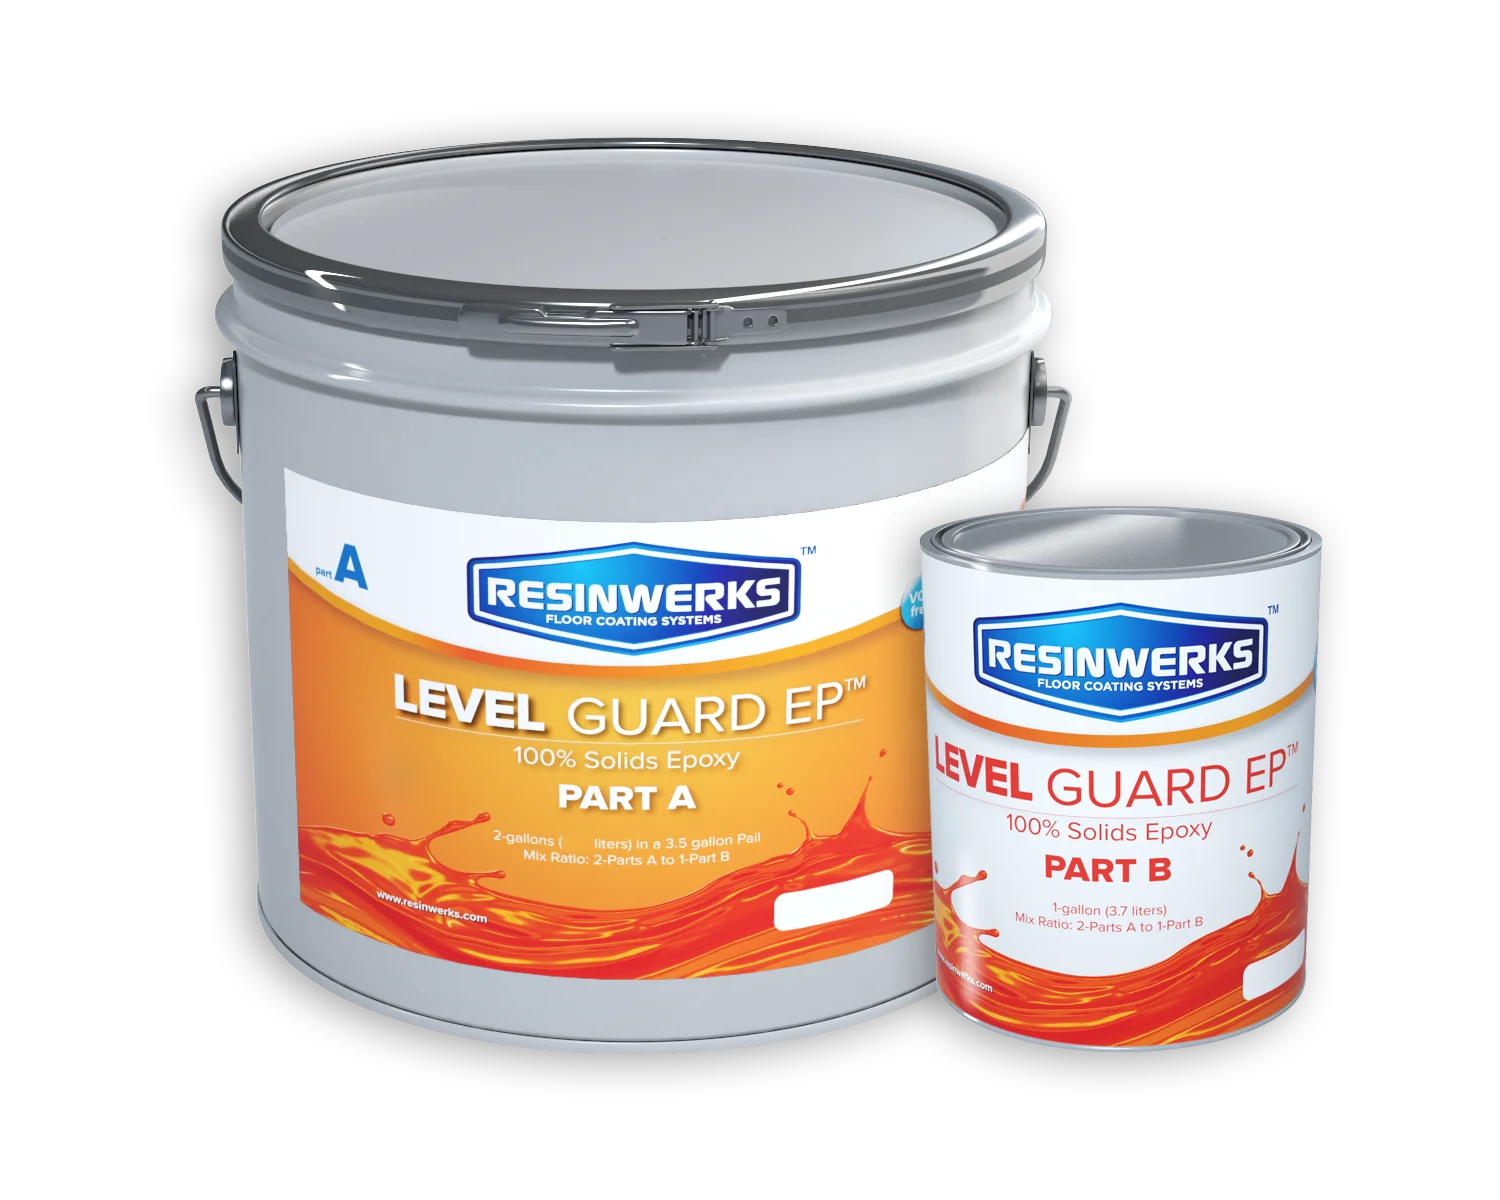 Level-Guard EP™